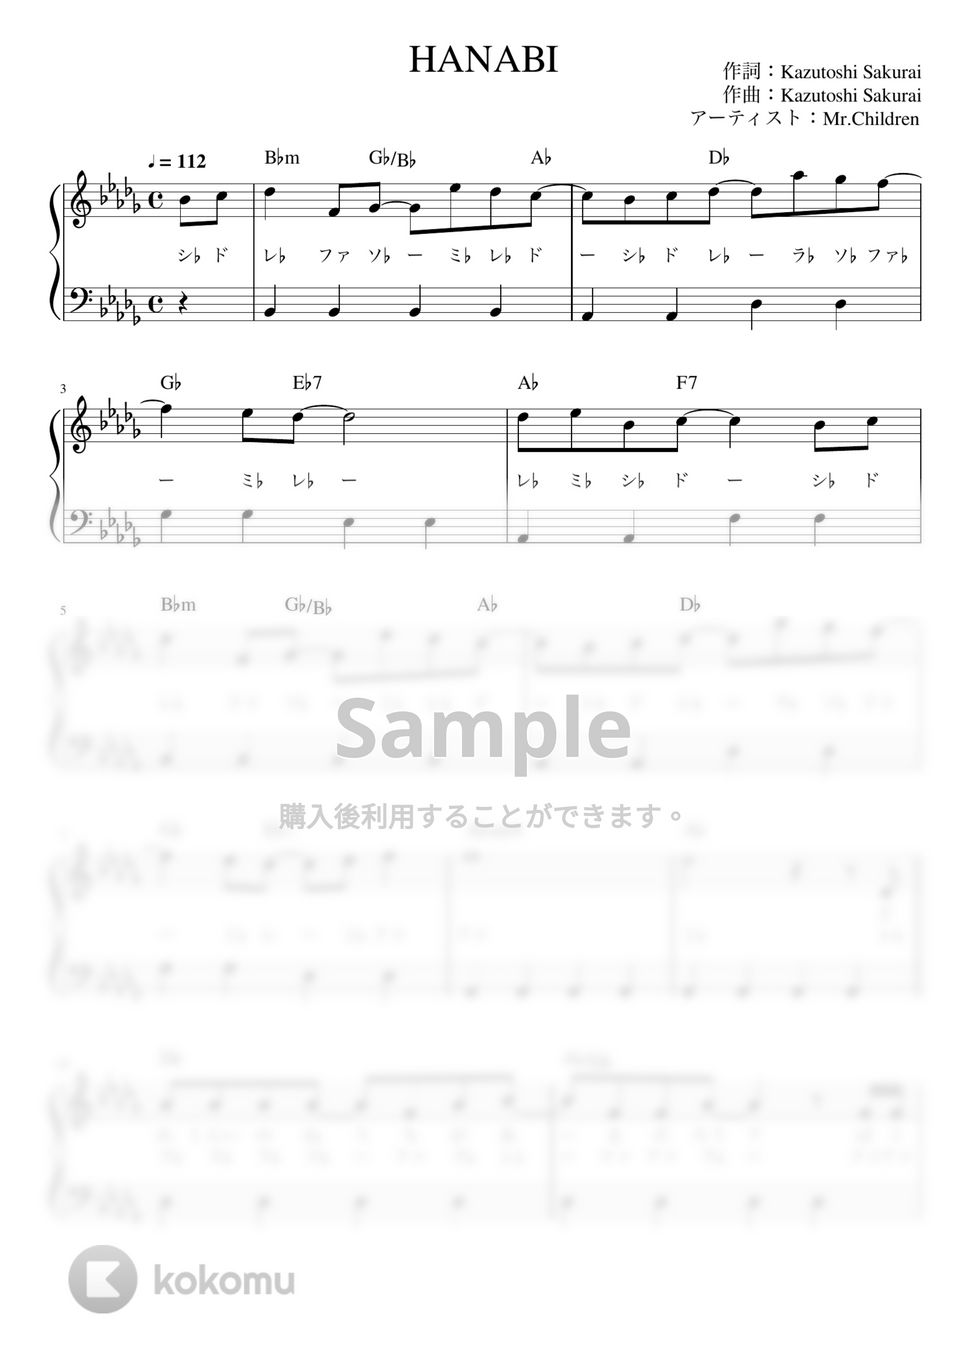 Mr.Children - HANABI (かんたん / 歌詞付き / ドレミ付き / 初心者) by piano.tokyo